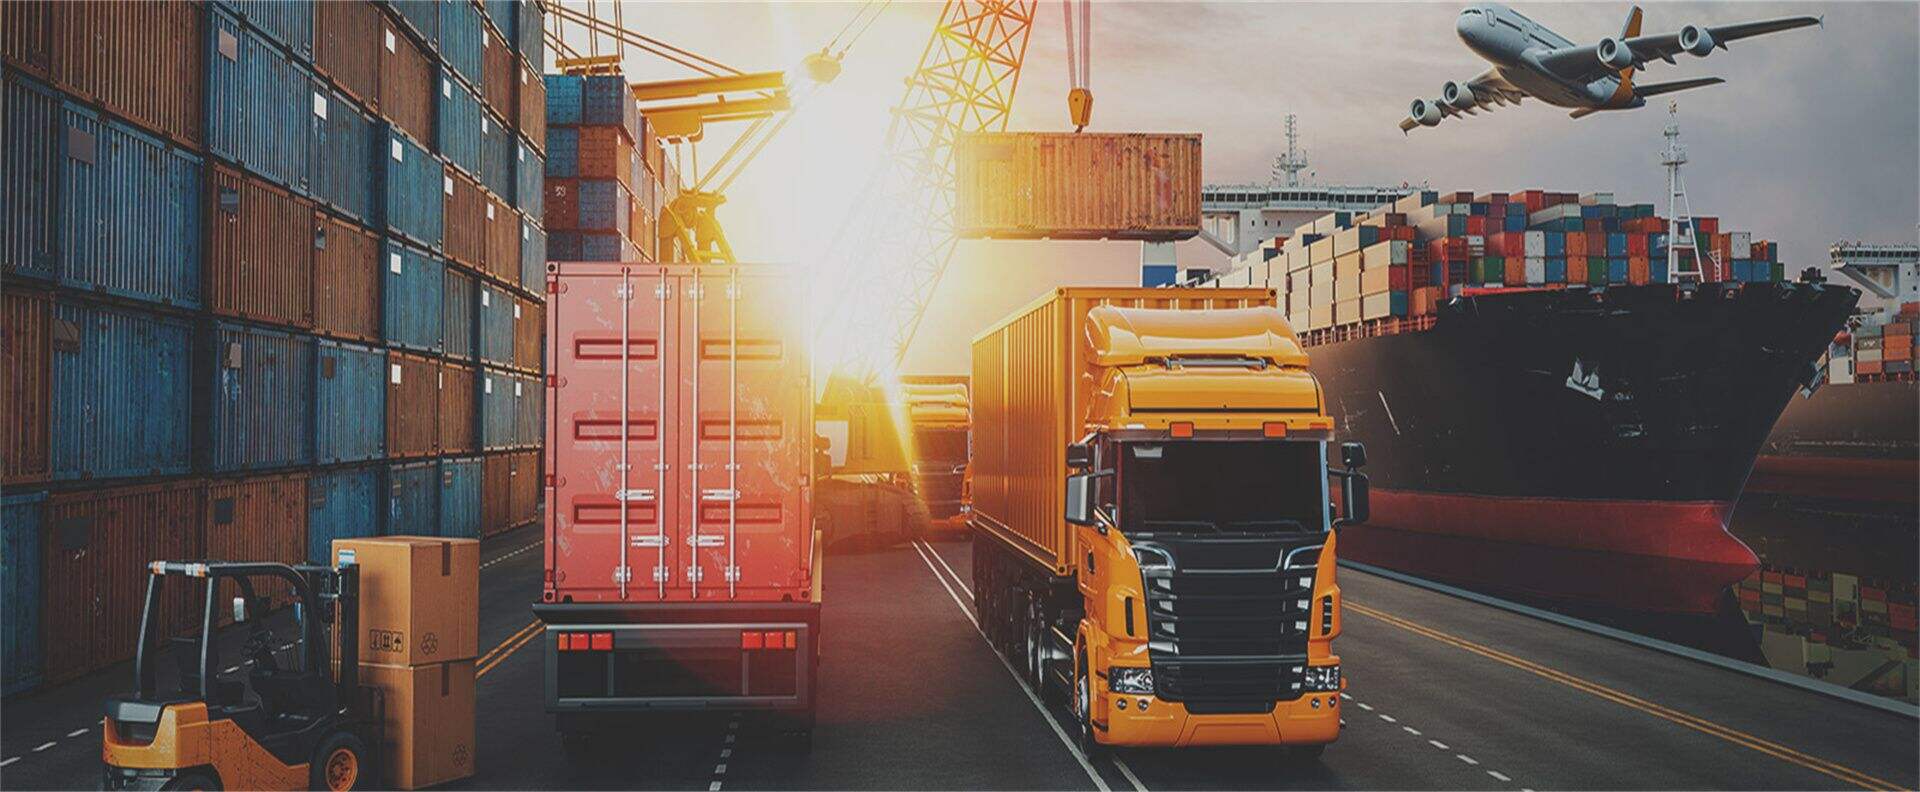 Professional international logistics and freights